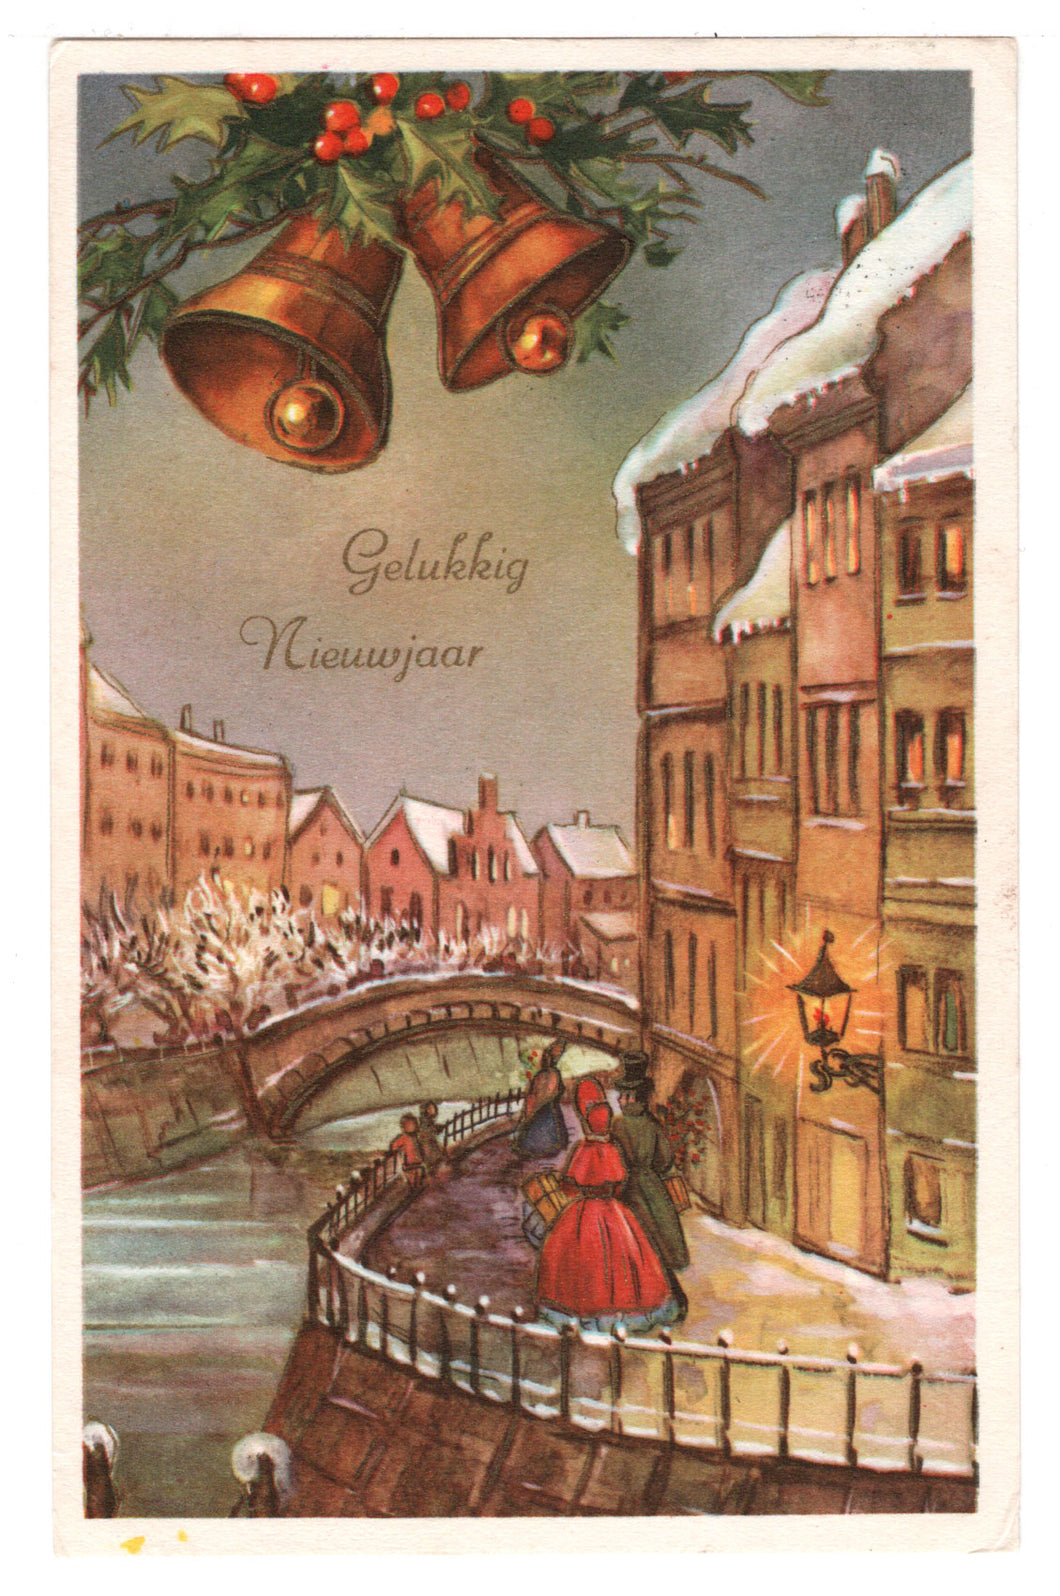 Happy New Year - Gelukkig Nieuwjaar Vintage Original Postcard # 0579 - Post Marked 1960's